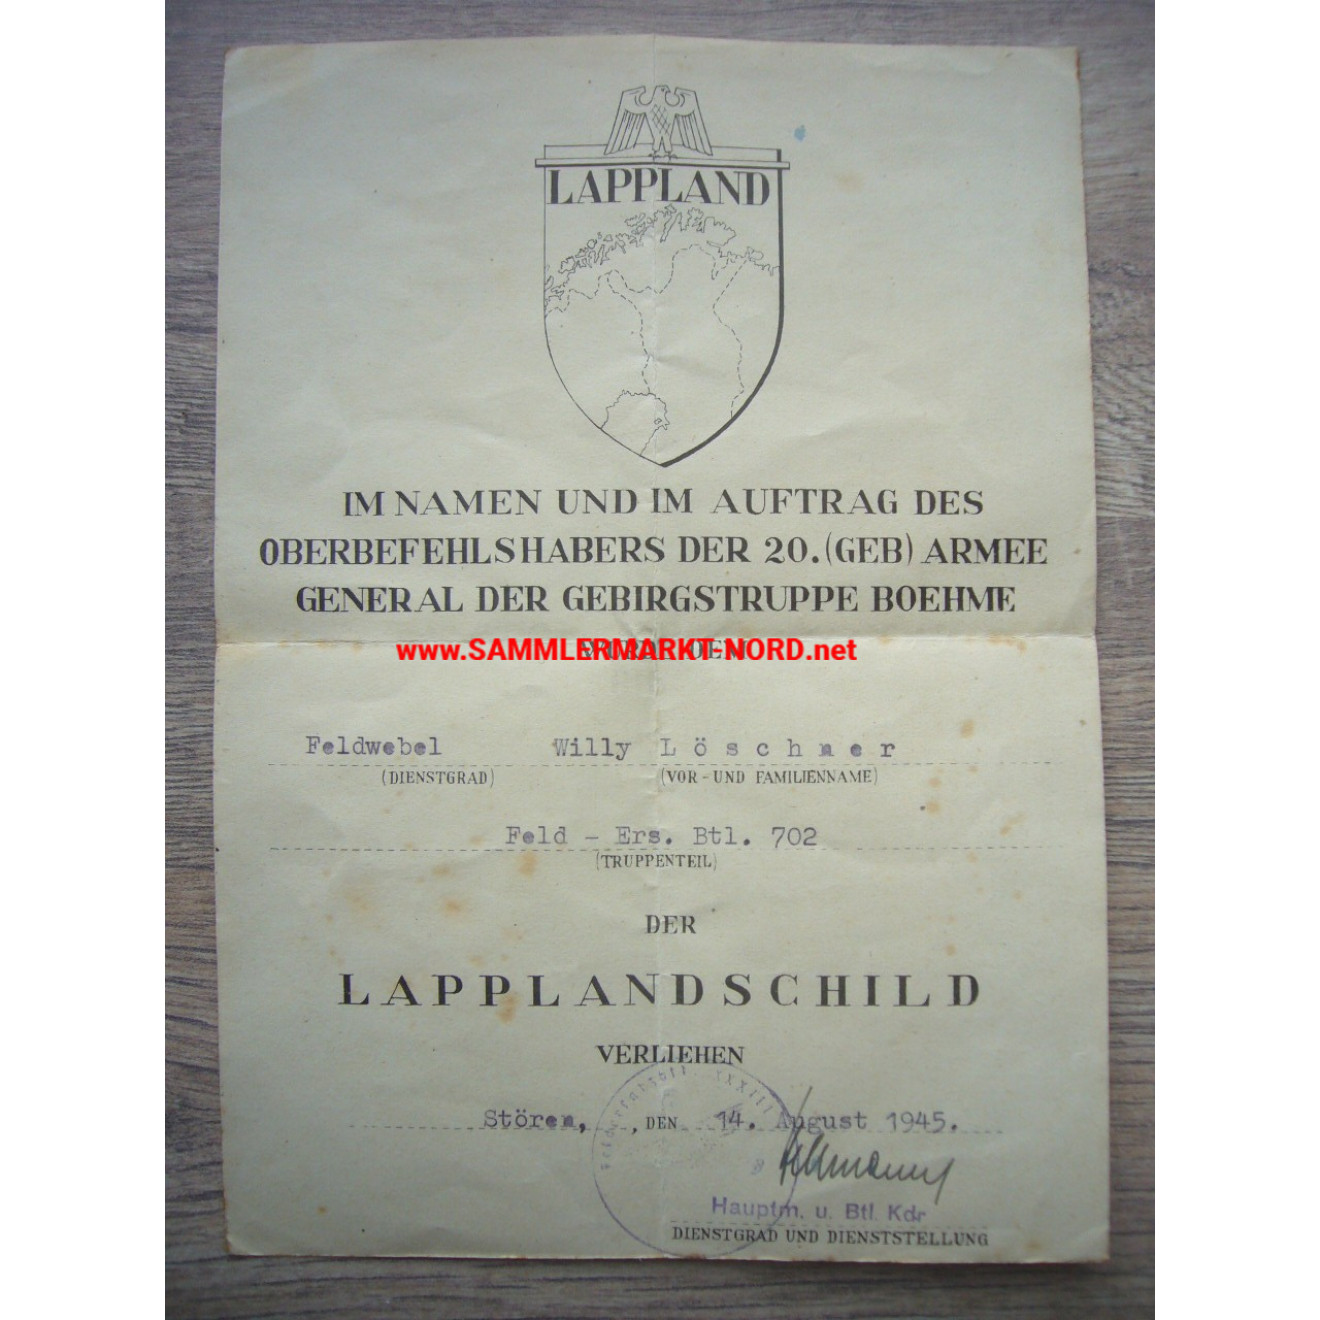 Lappland Campaign Shield award certificate - Feld-Ers. Btl. 702